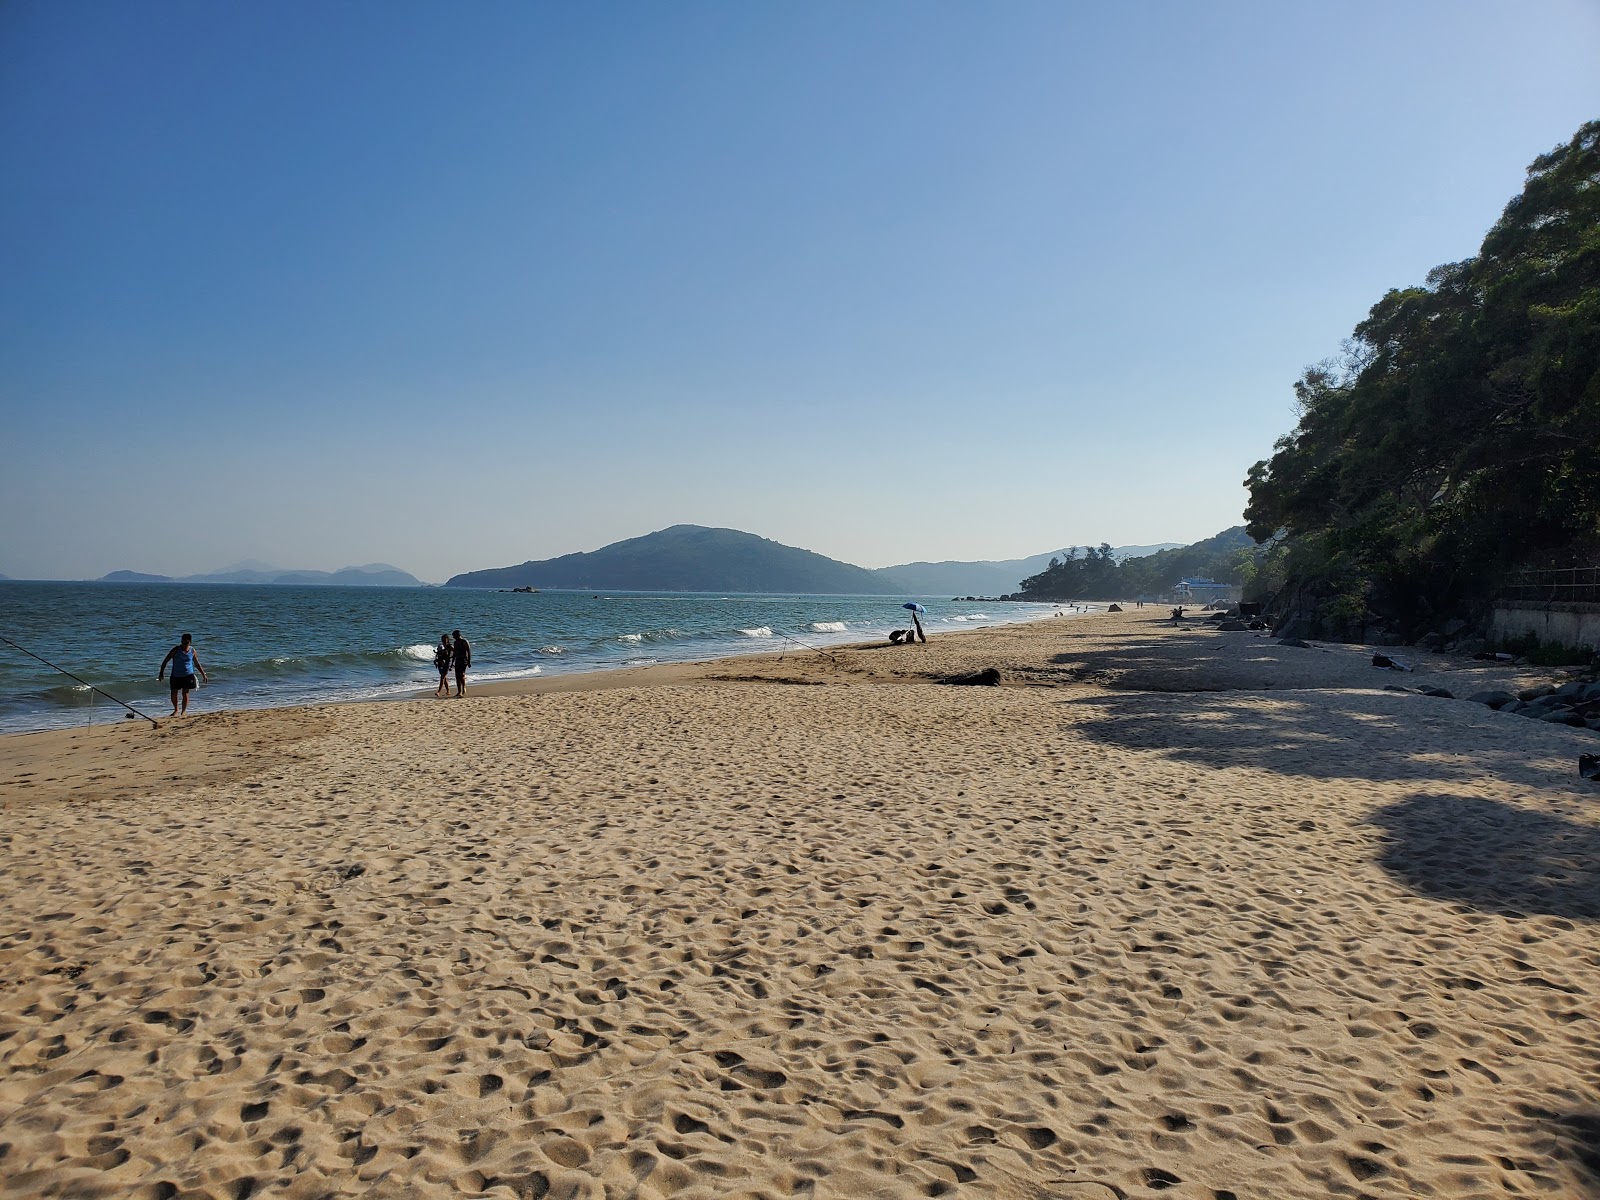 Fotografie cu Lower Cheung Sha Beach - locul popular printre cunoscătorii de relaxare